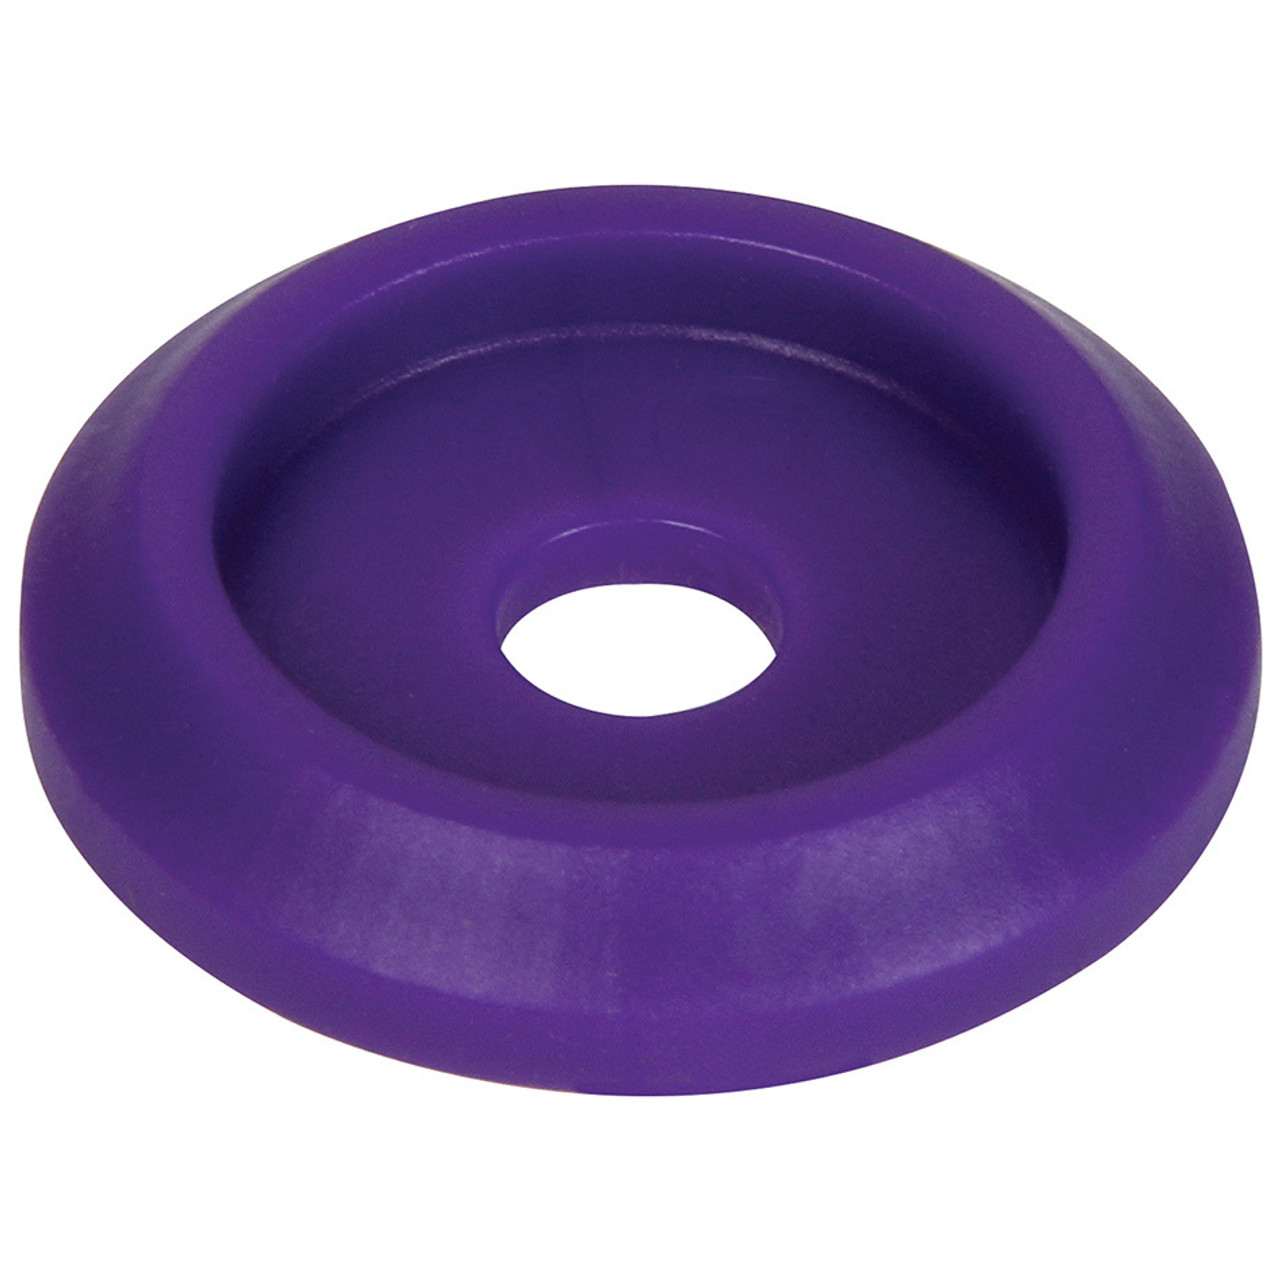 Body Bolt Washer Plastic Purple 10pk